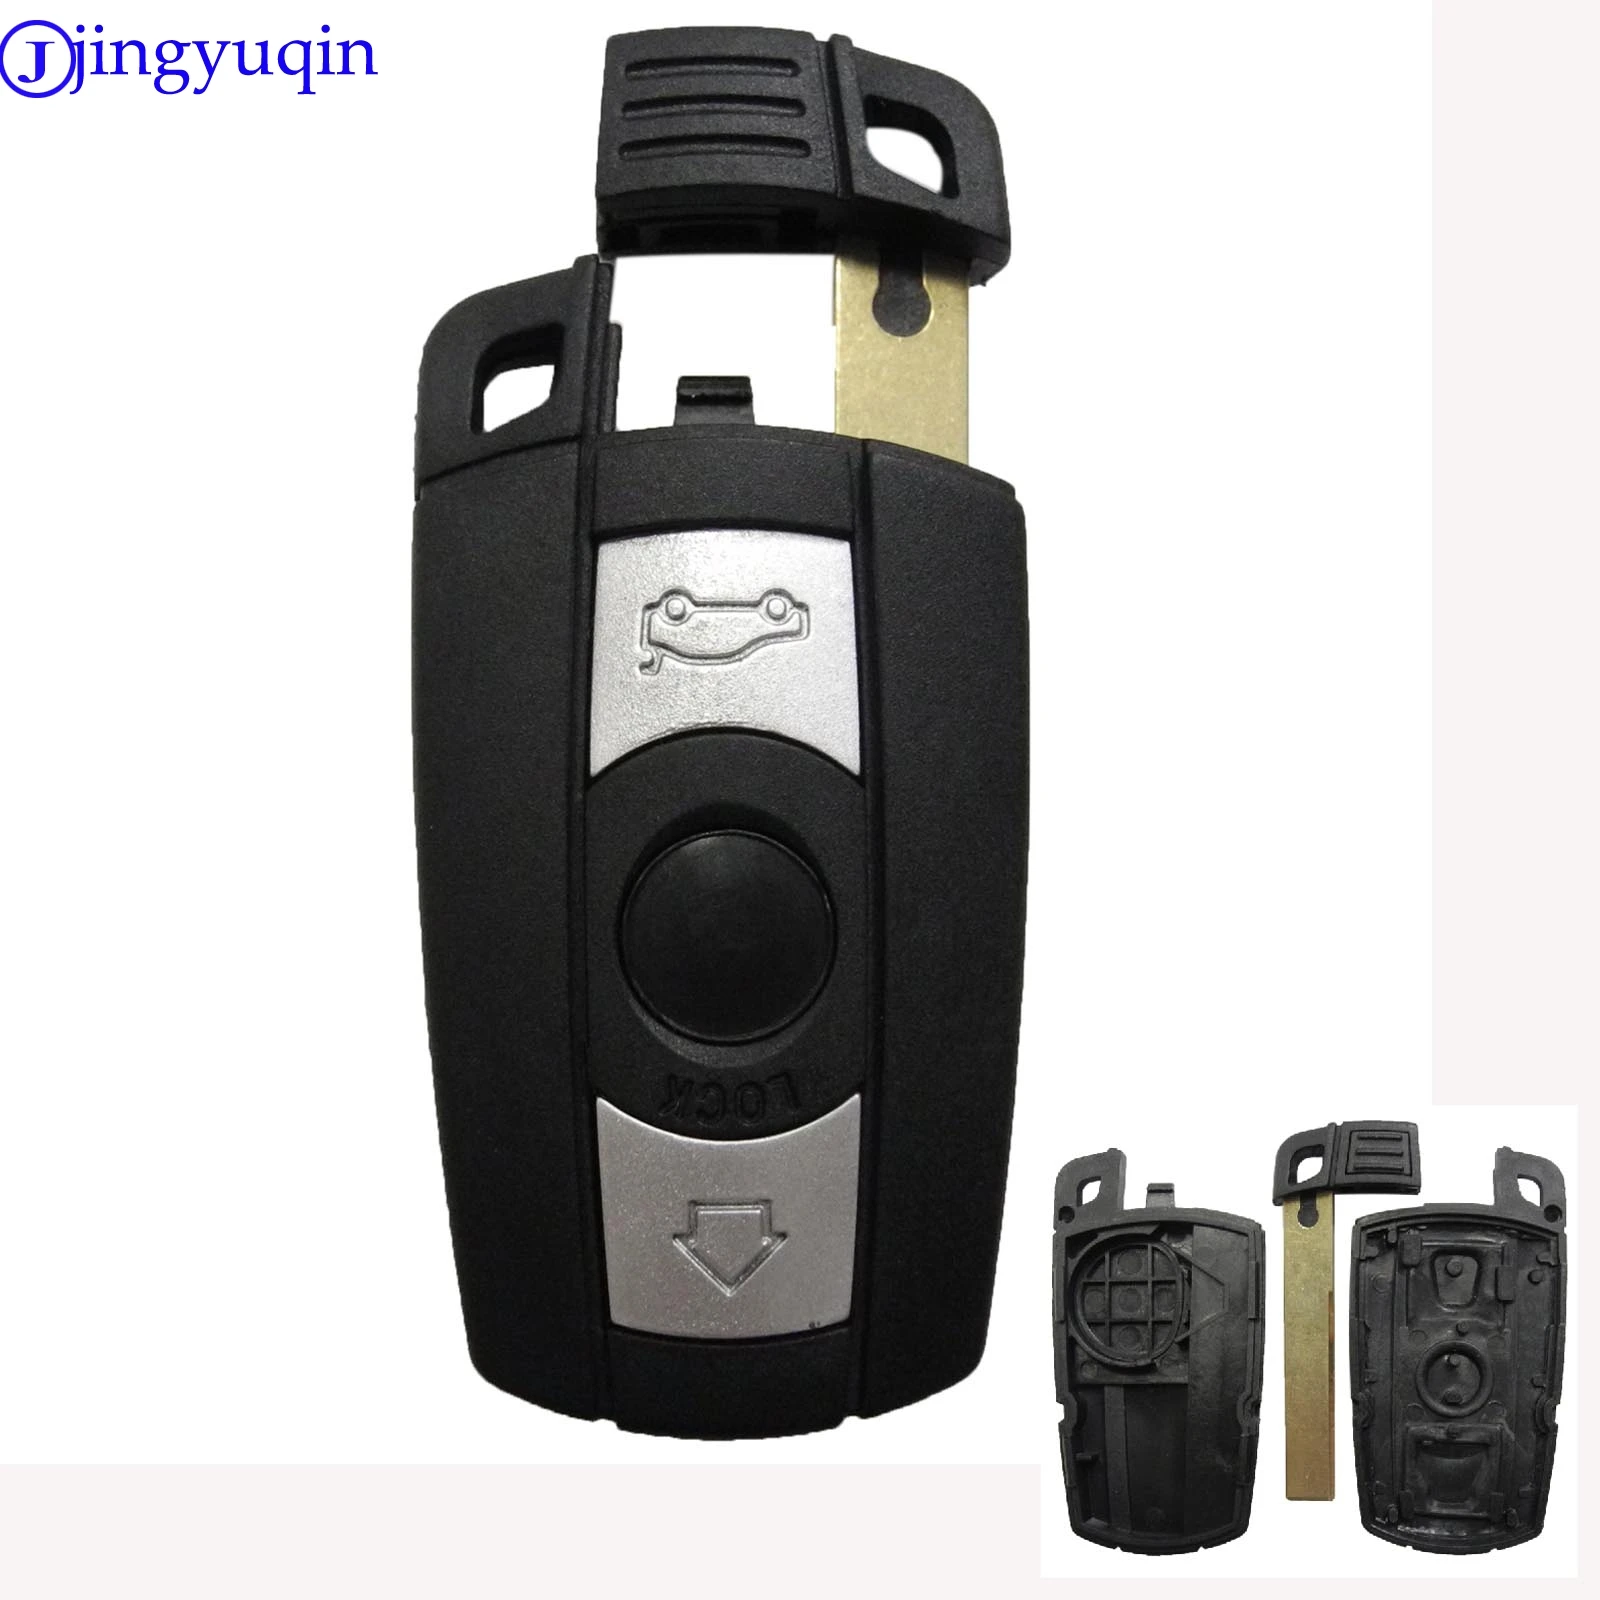 jingyuqin Smart Key Shell Fob Key Cover for E90 E91 E92 E60 Remote Case for BMW 1 3 5 6 X Series Smart Car Key Shell With Logo